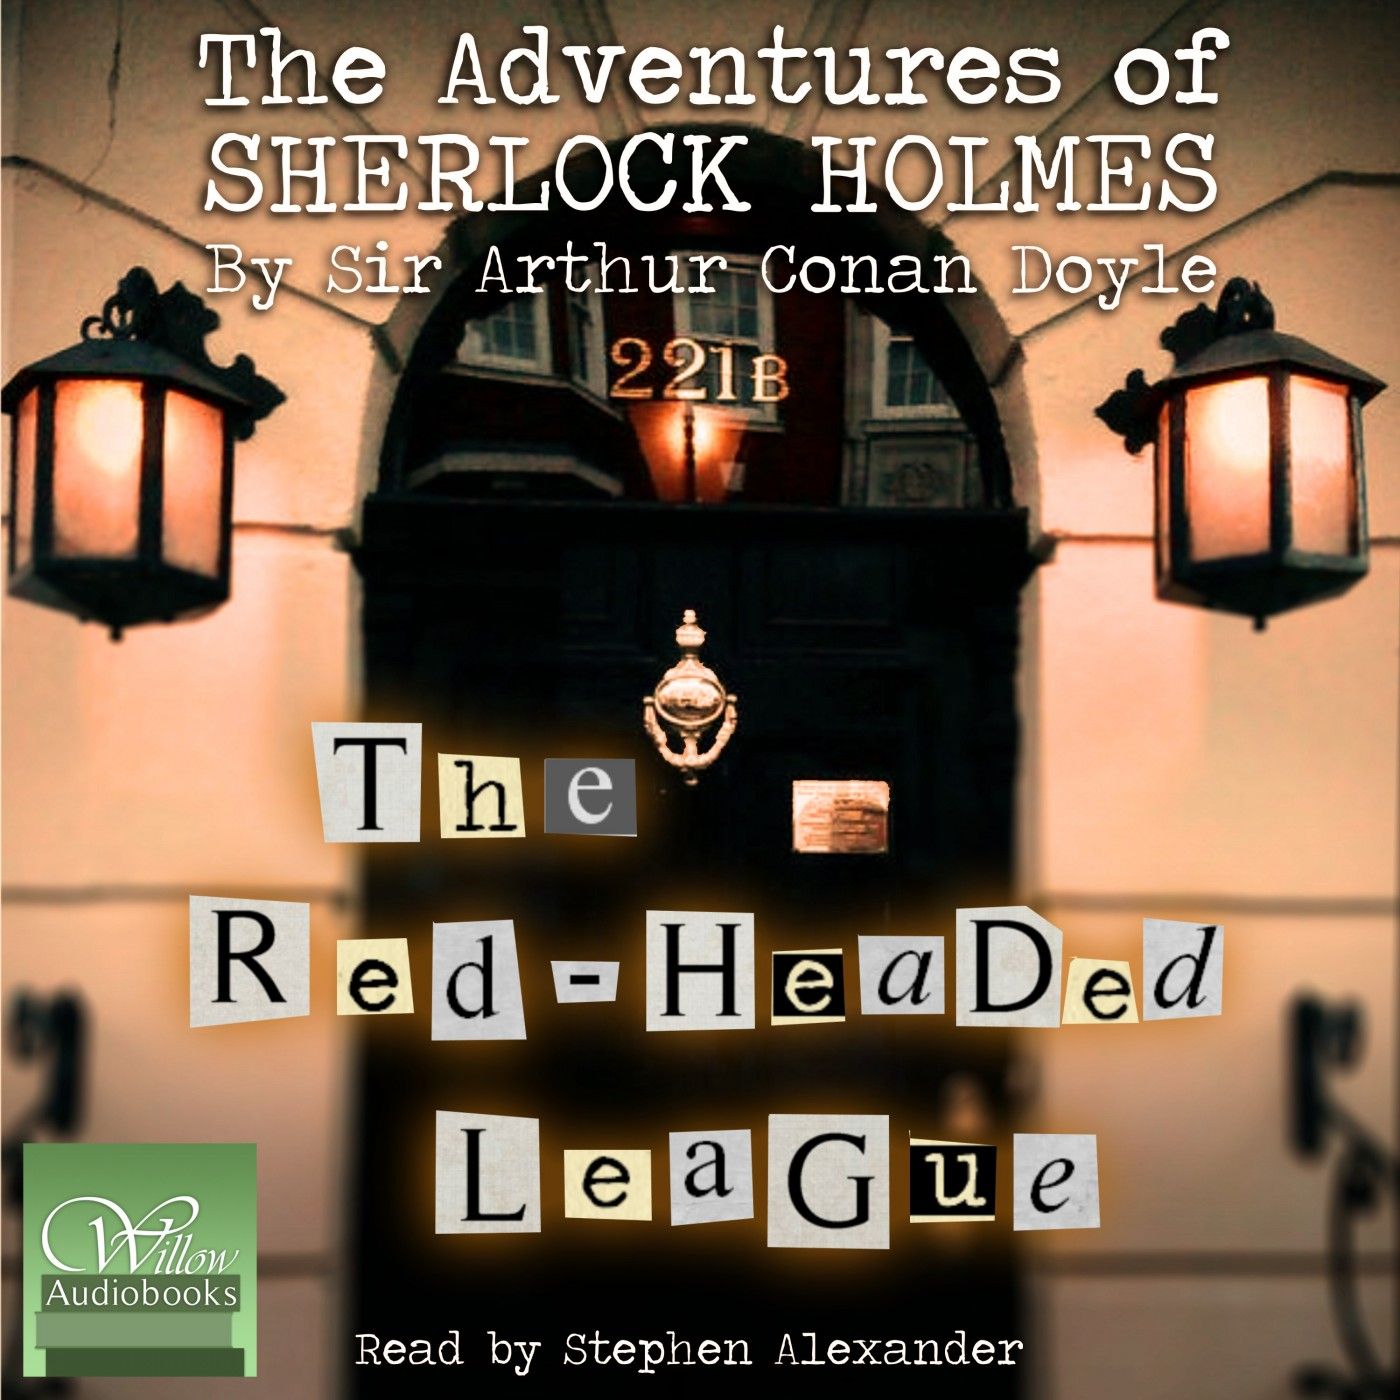 BONUS: The Red-Headed League | The Adventures of Sherlock Holmes